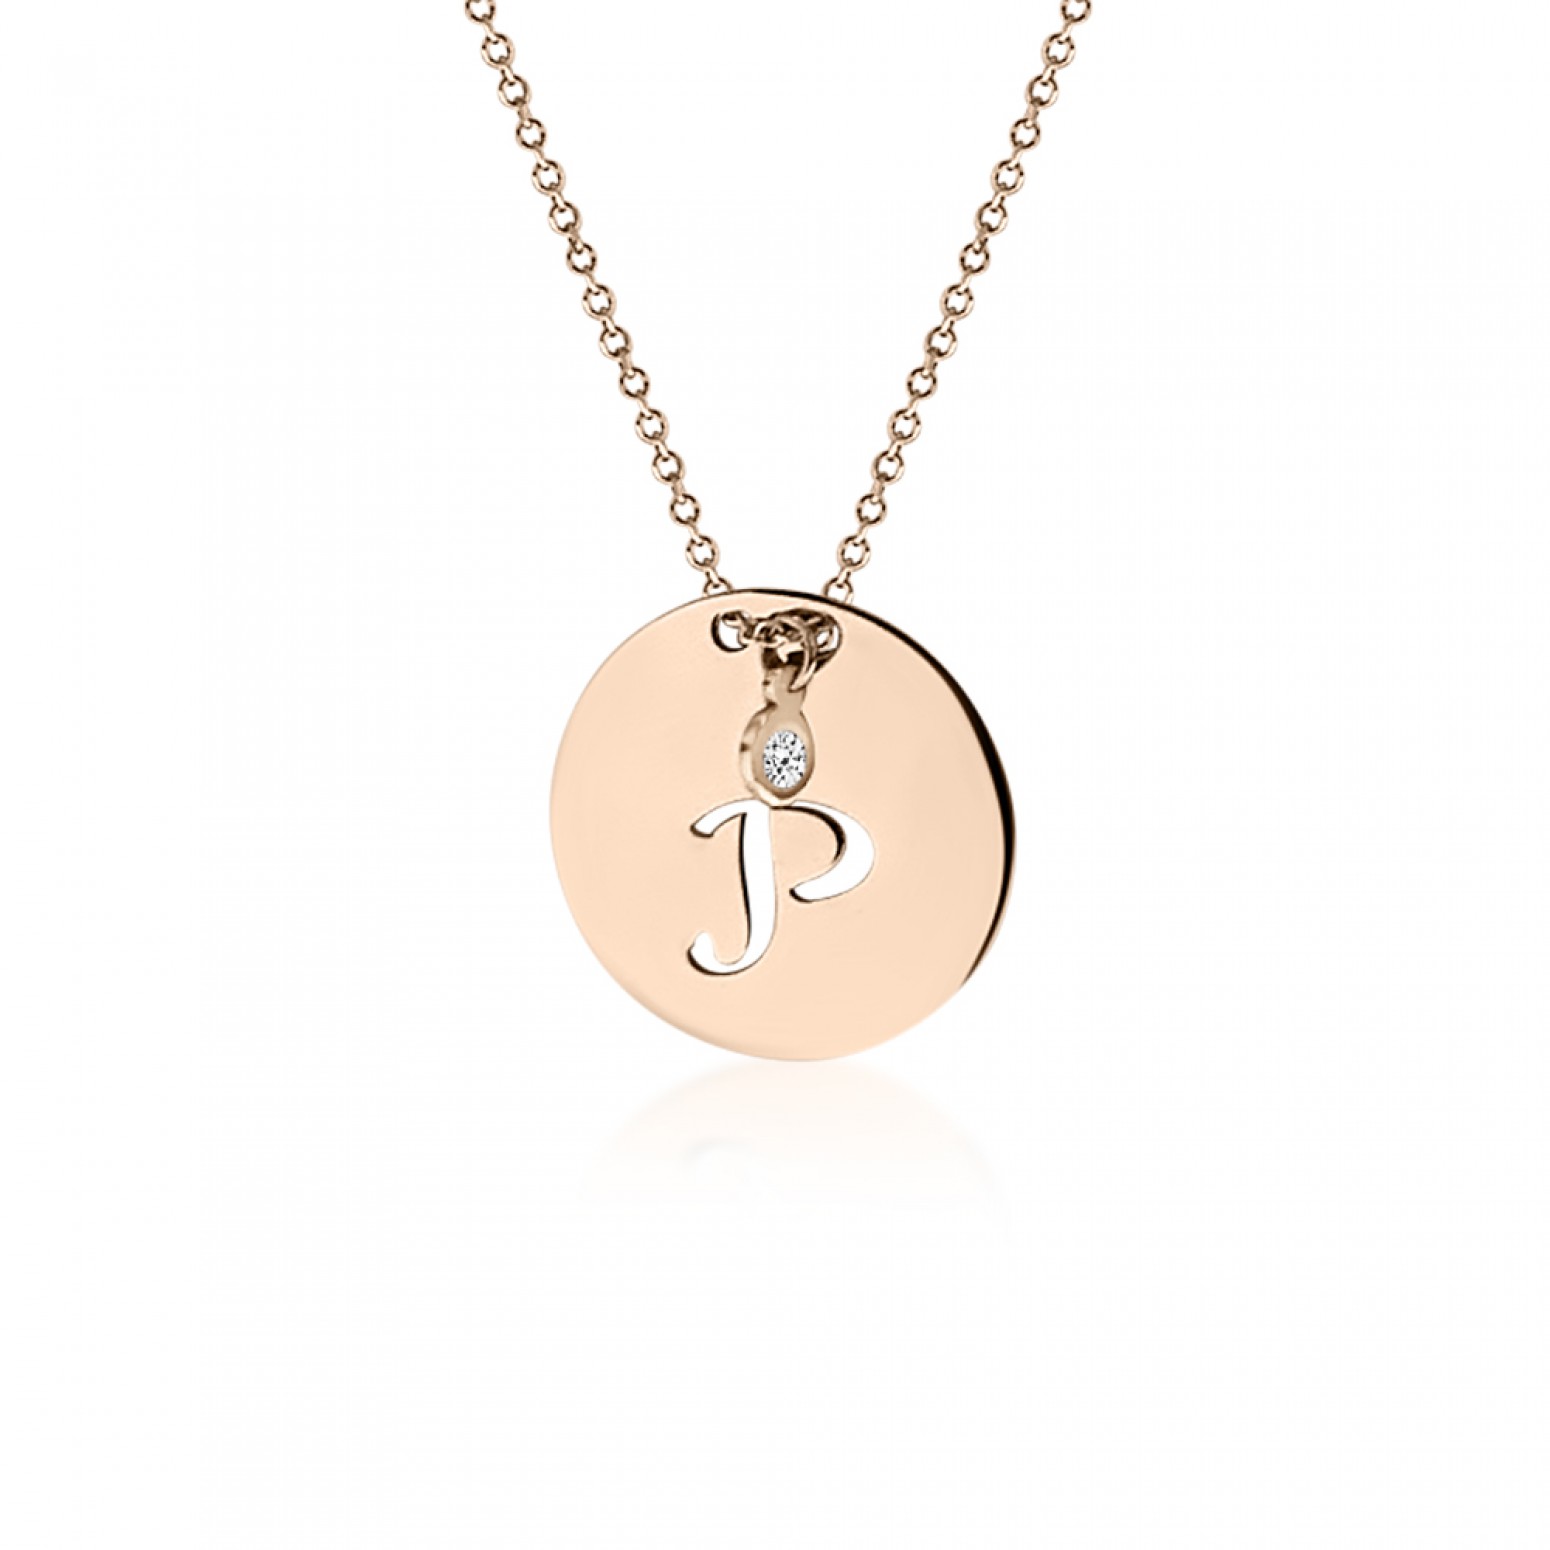 Monogram necklace Ρ in round disk , Κ14 pink gold with diamond 0.02ct, VS2, H ko5086 NECKLACES Κοσμηματα - chrilia.gr